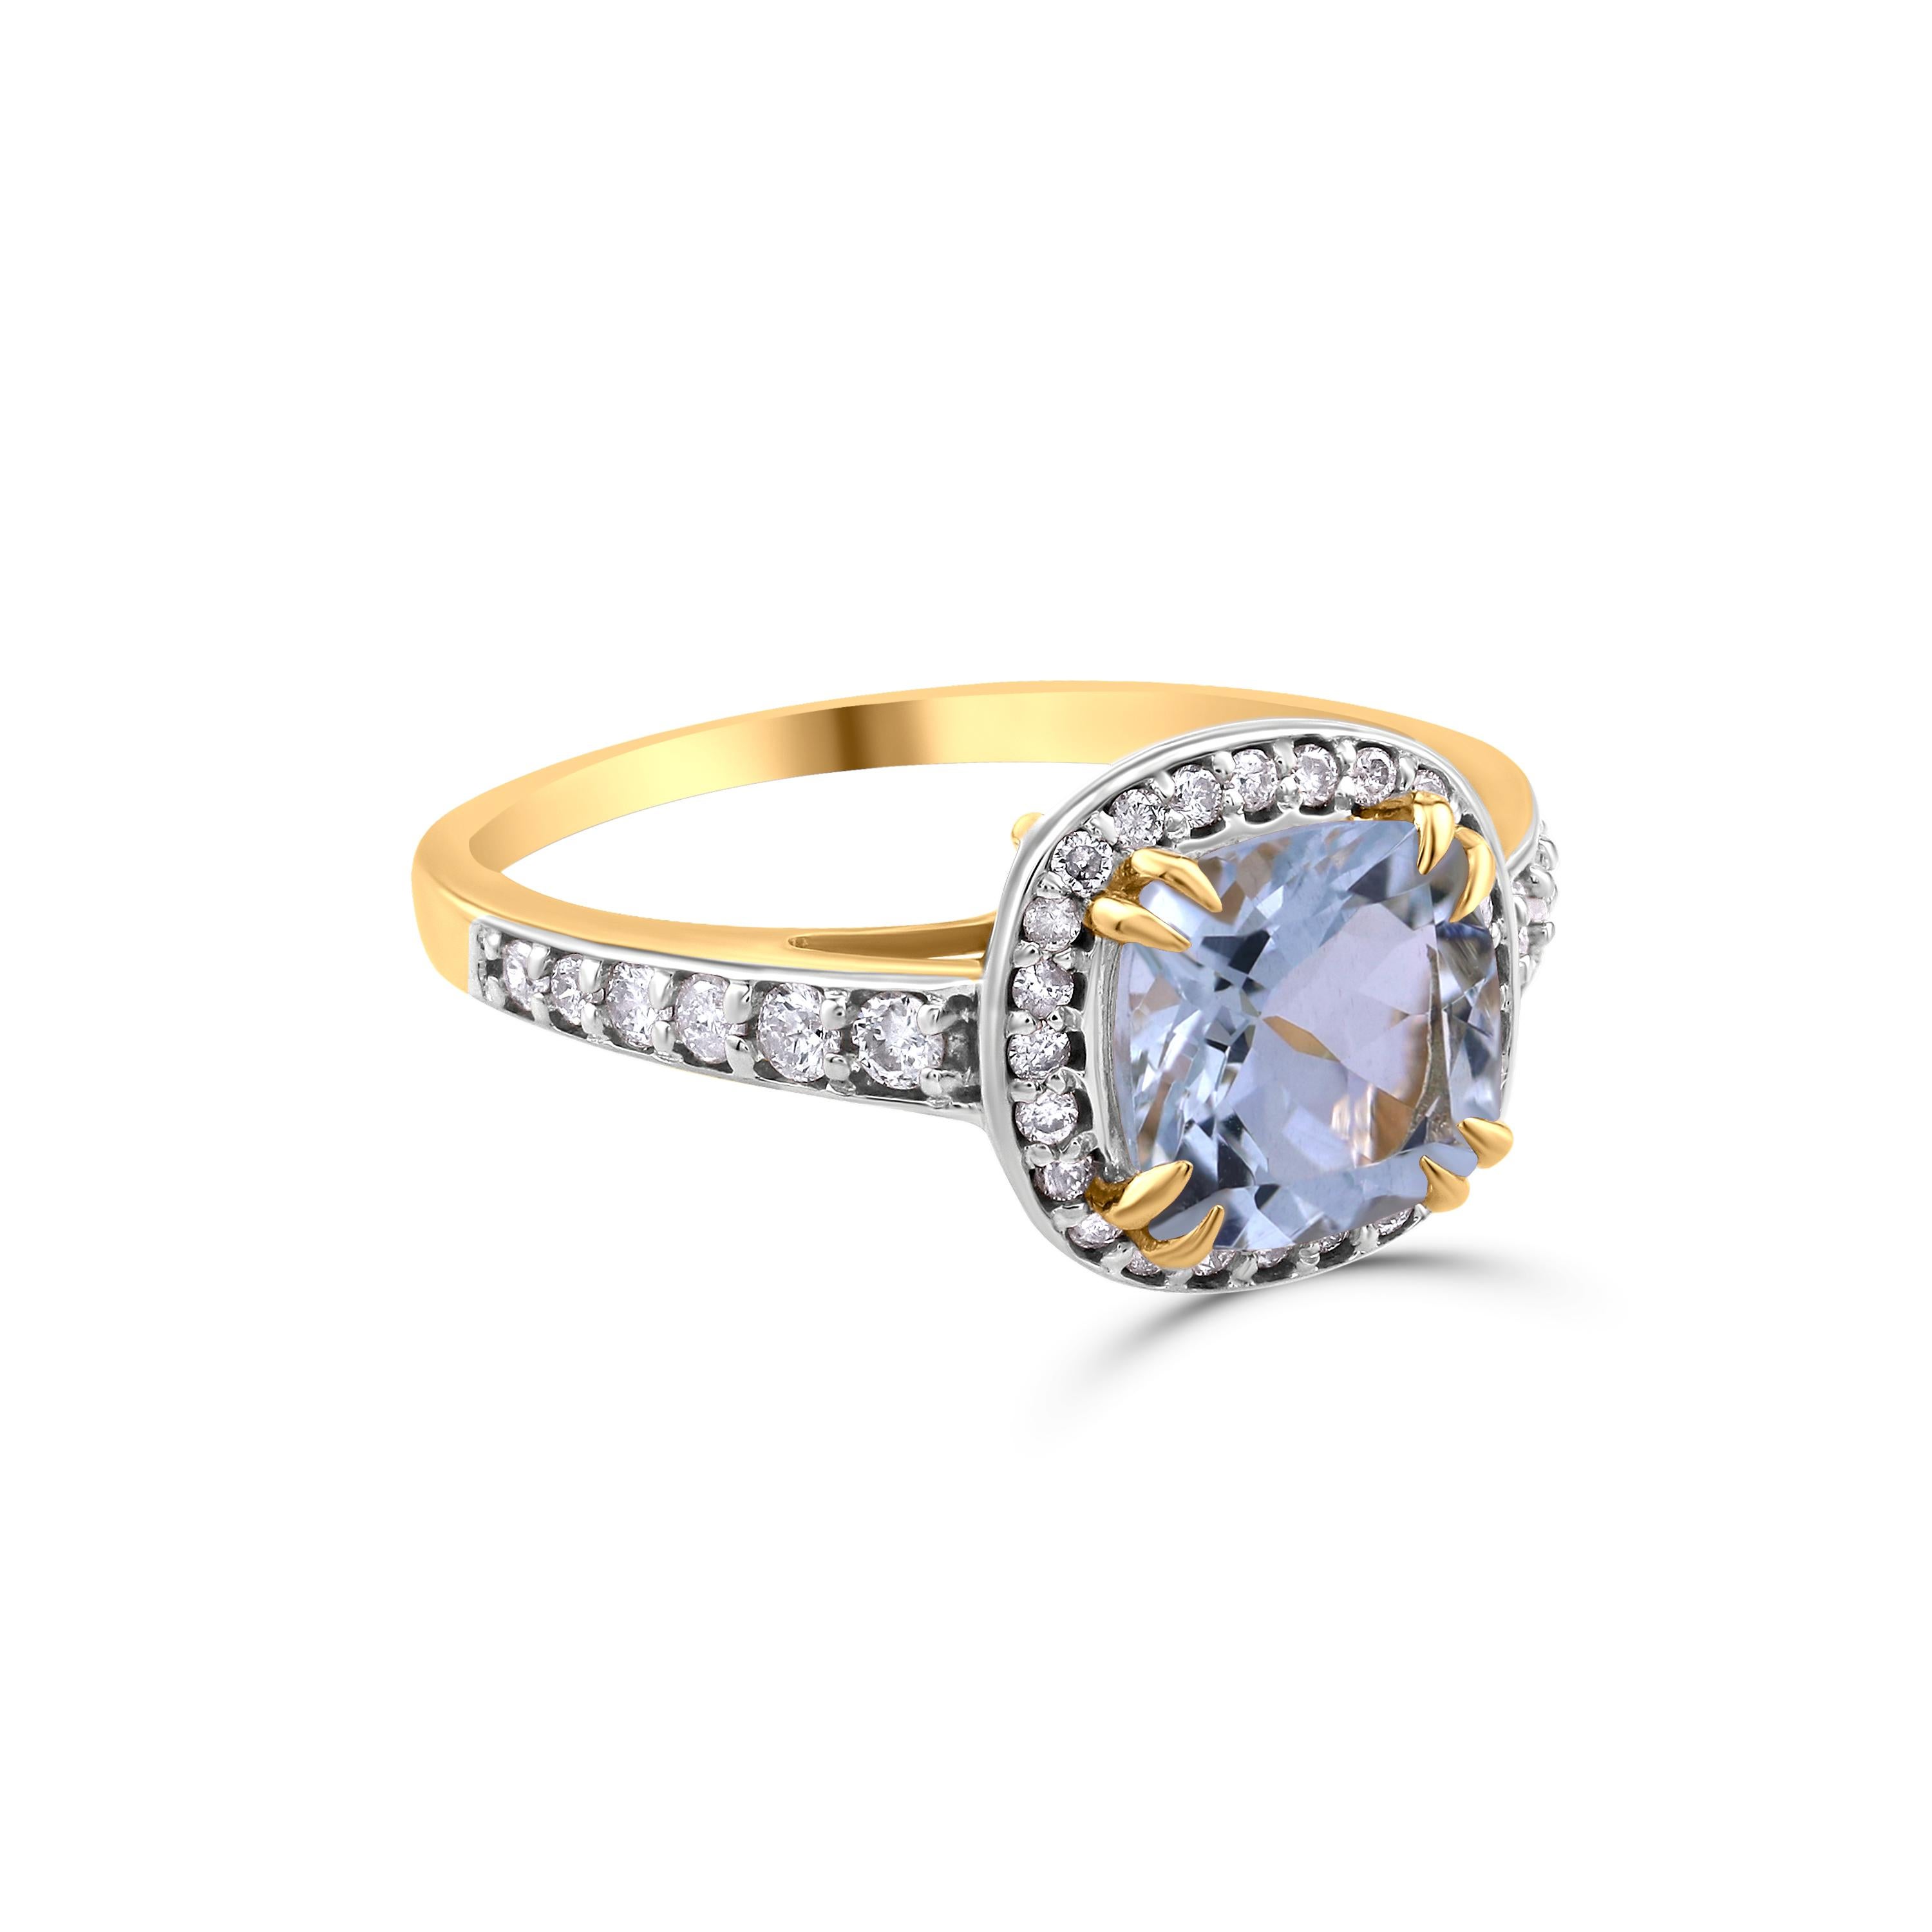 Gemistry 1.3 Carat Cushion Aquamarine Halo Solitaire Diamond Ring in 14K Gold 3